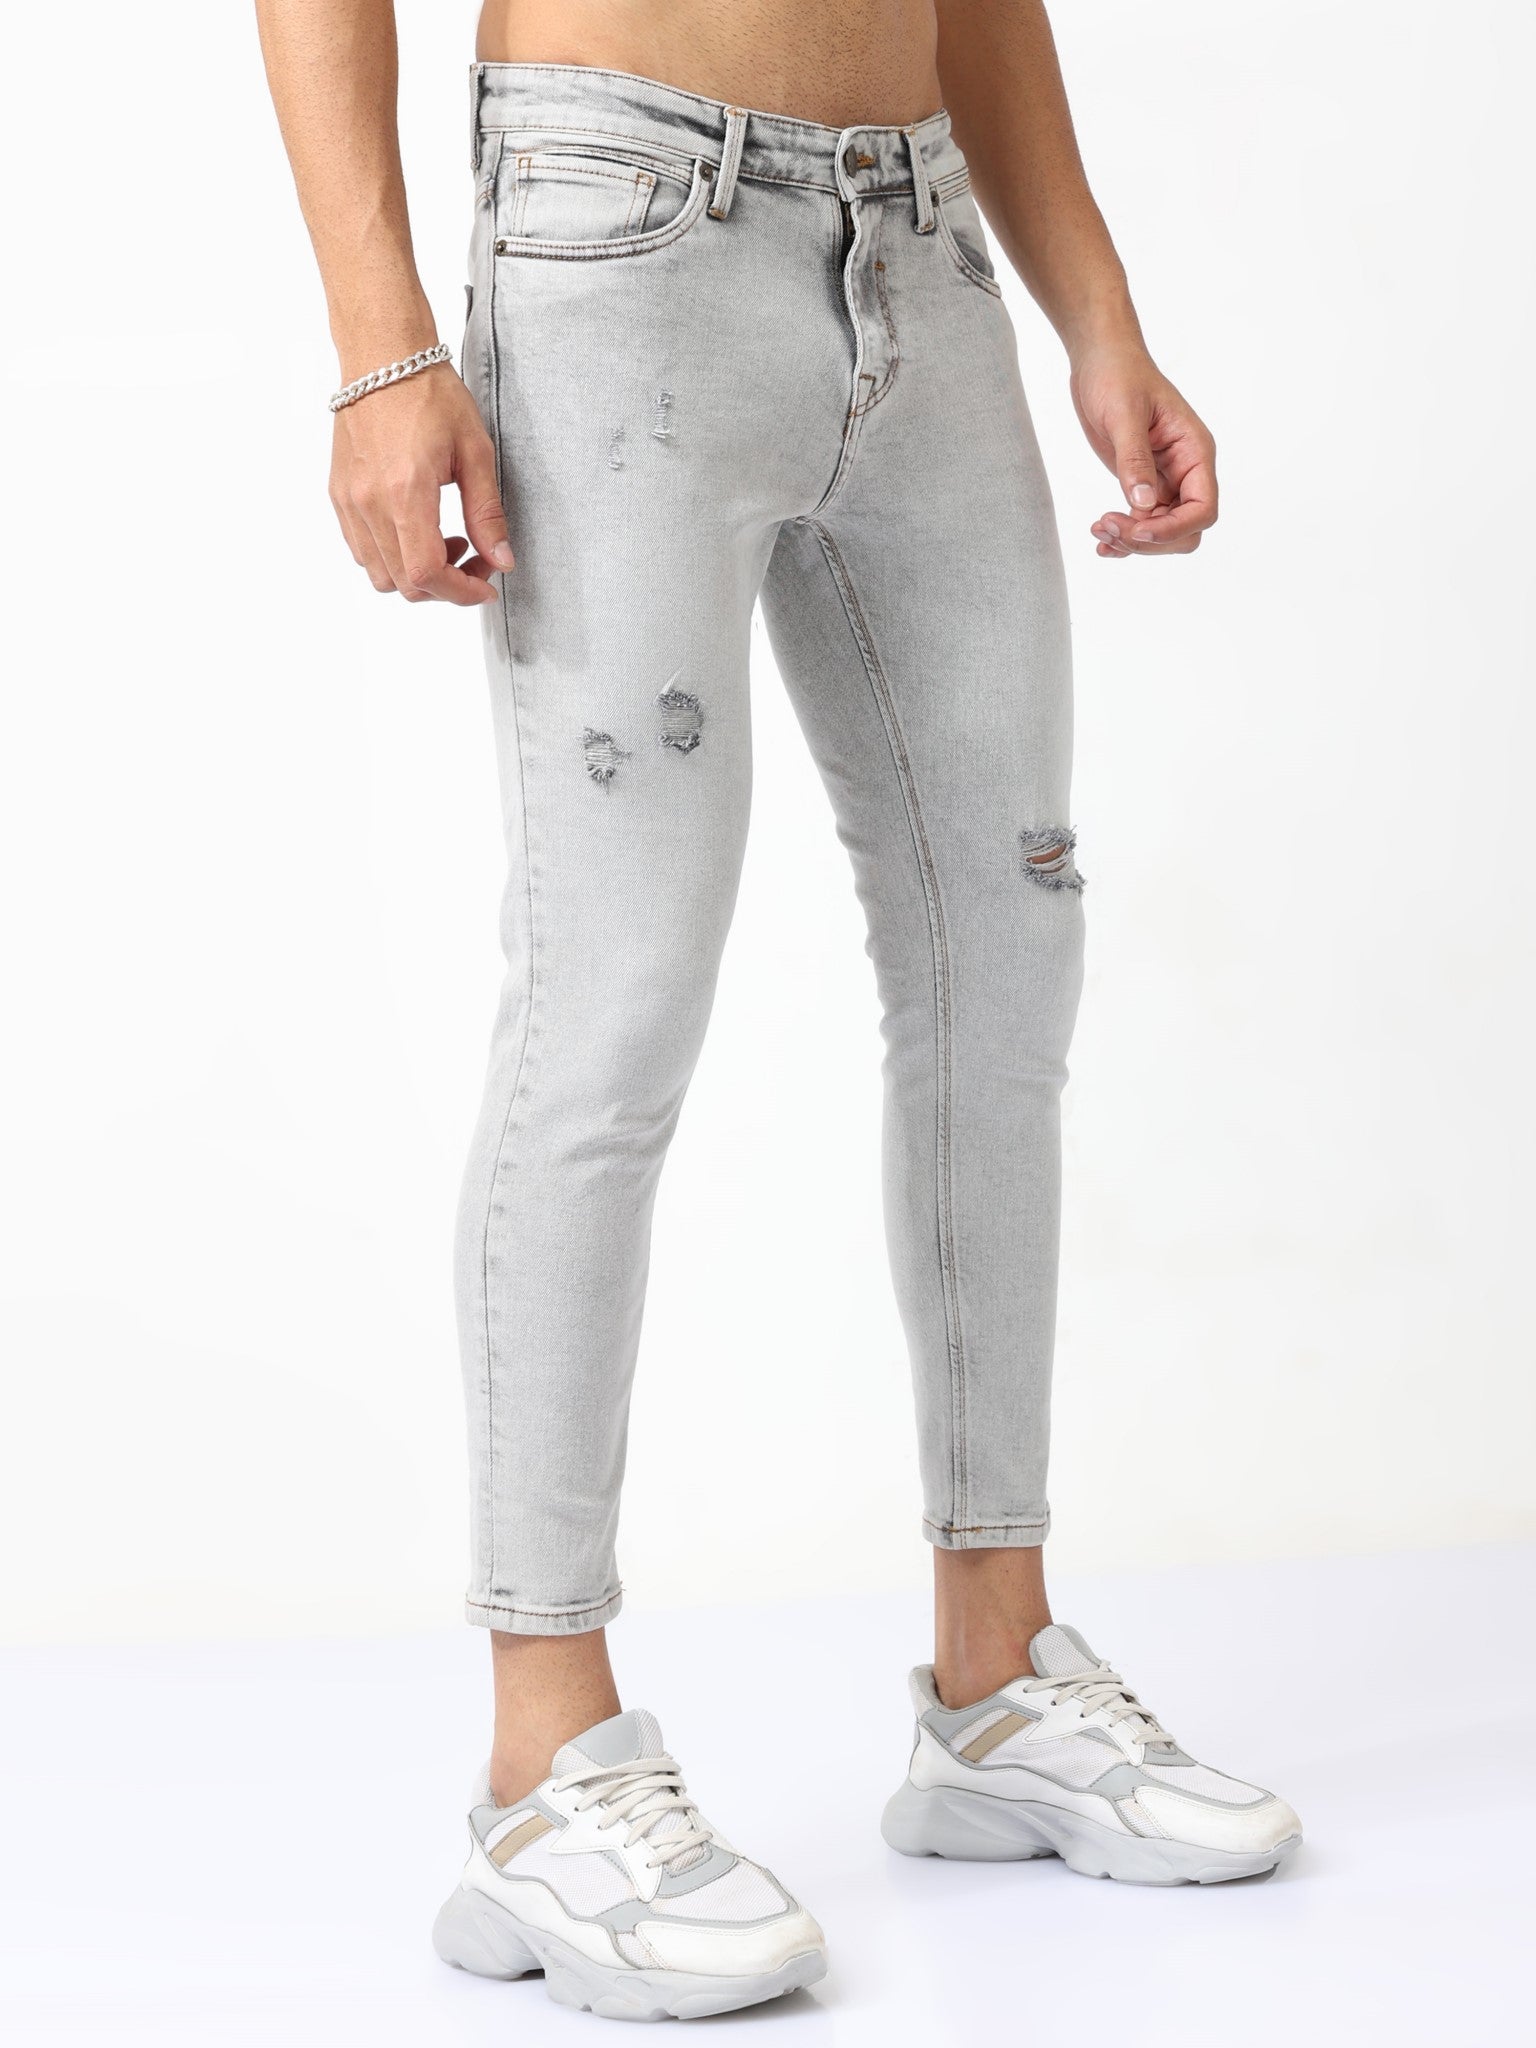 Gray Owl Skinny Jeans